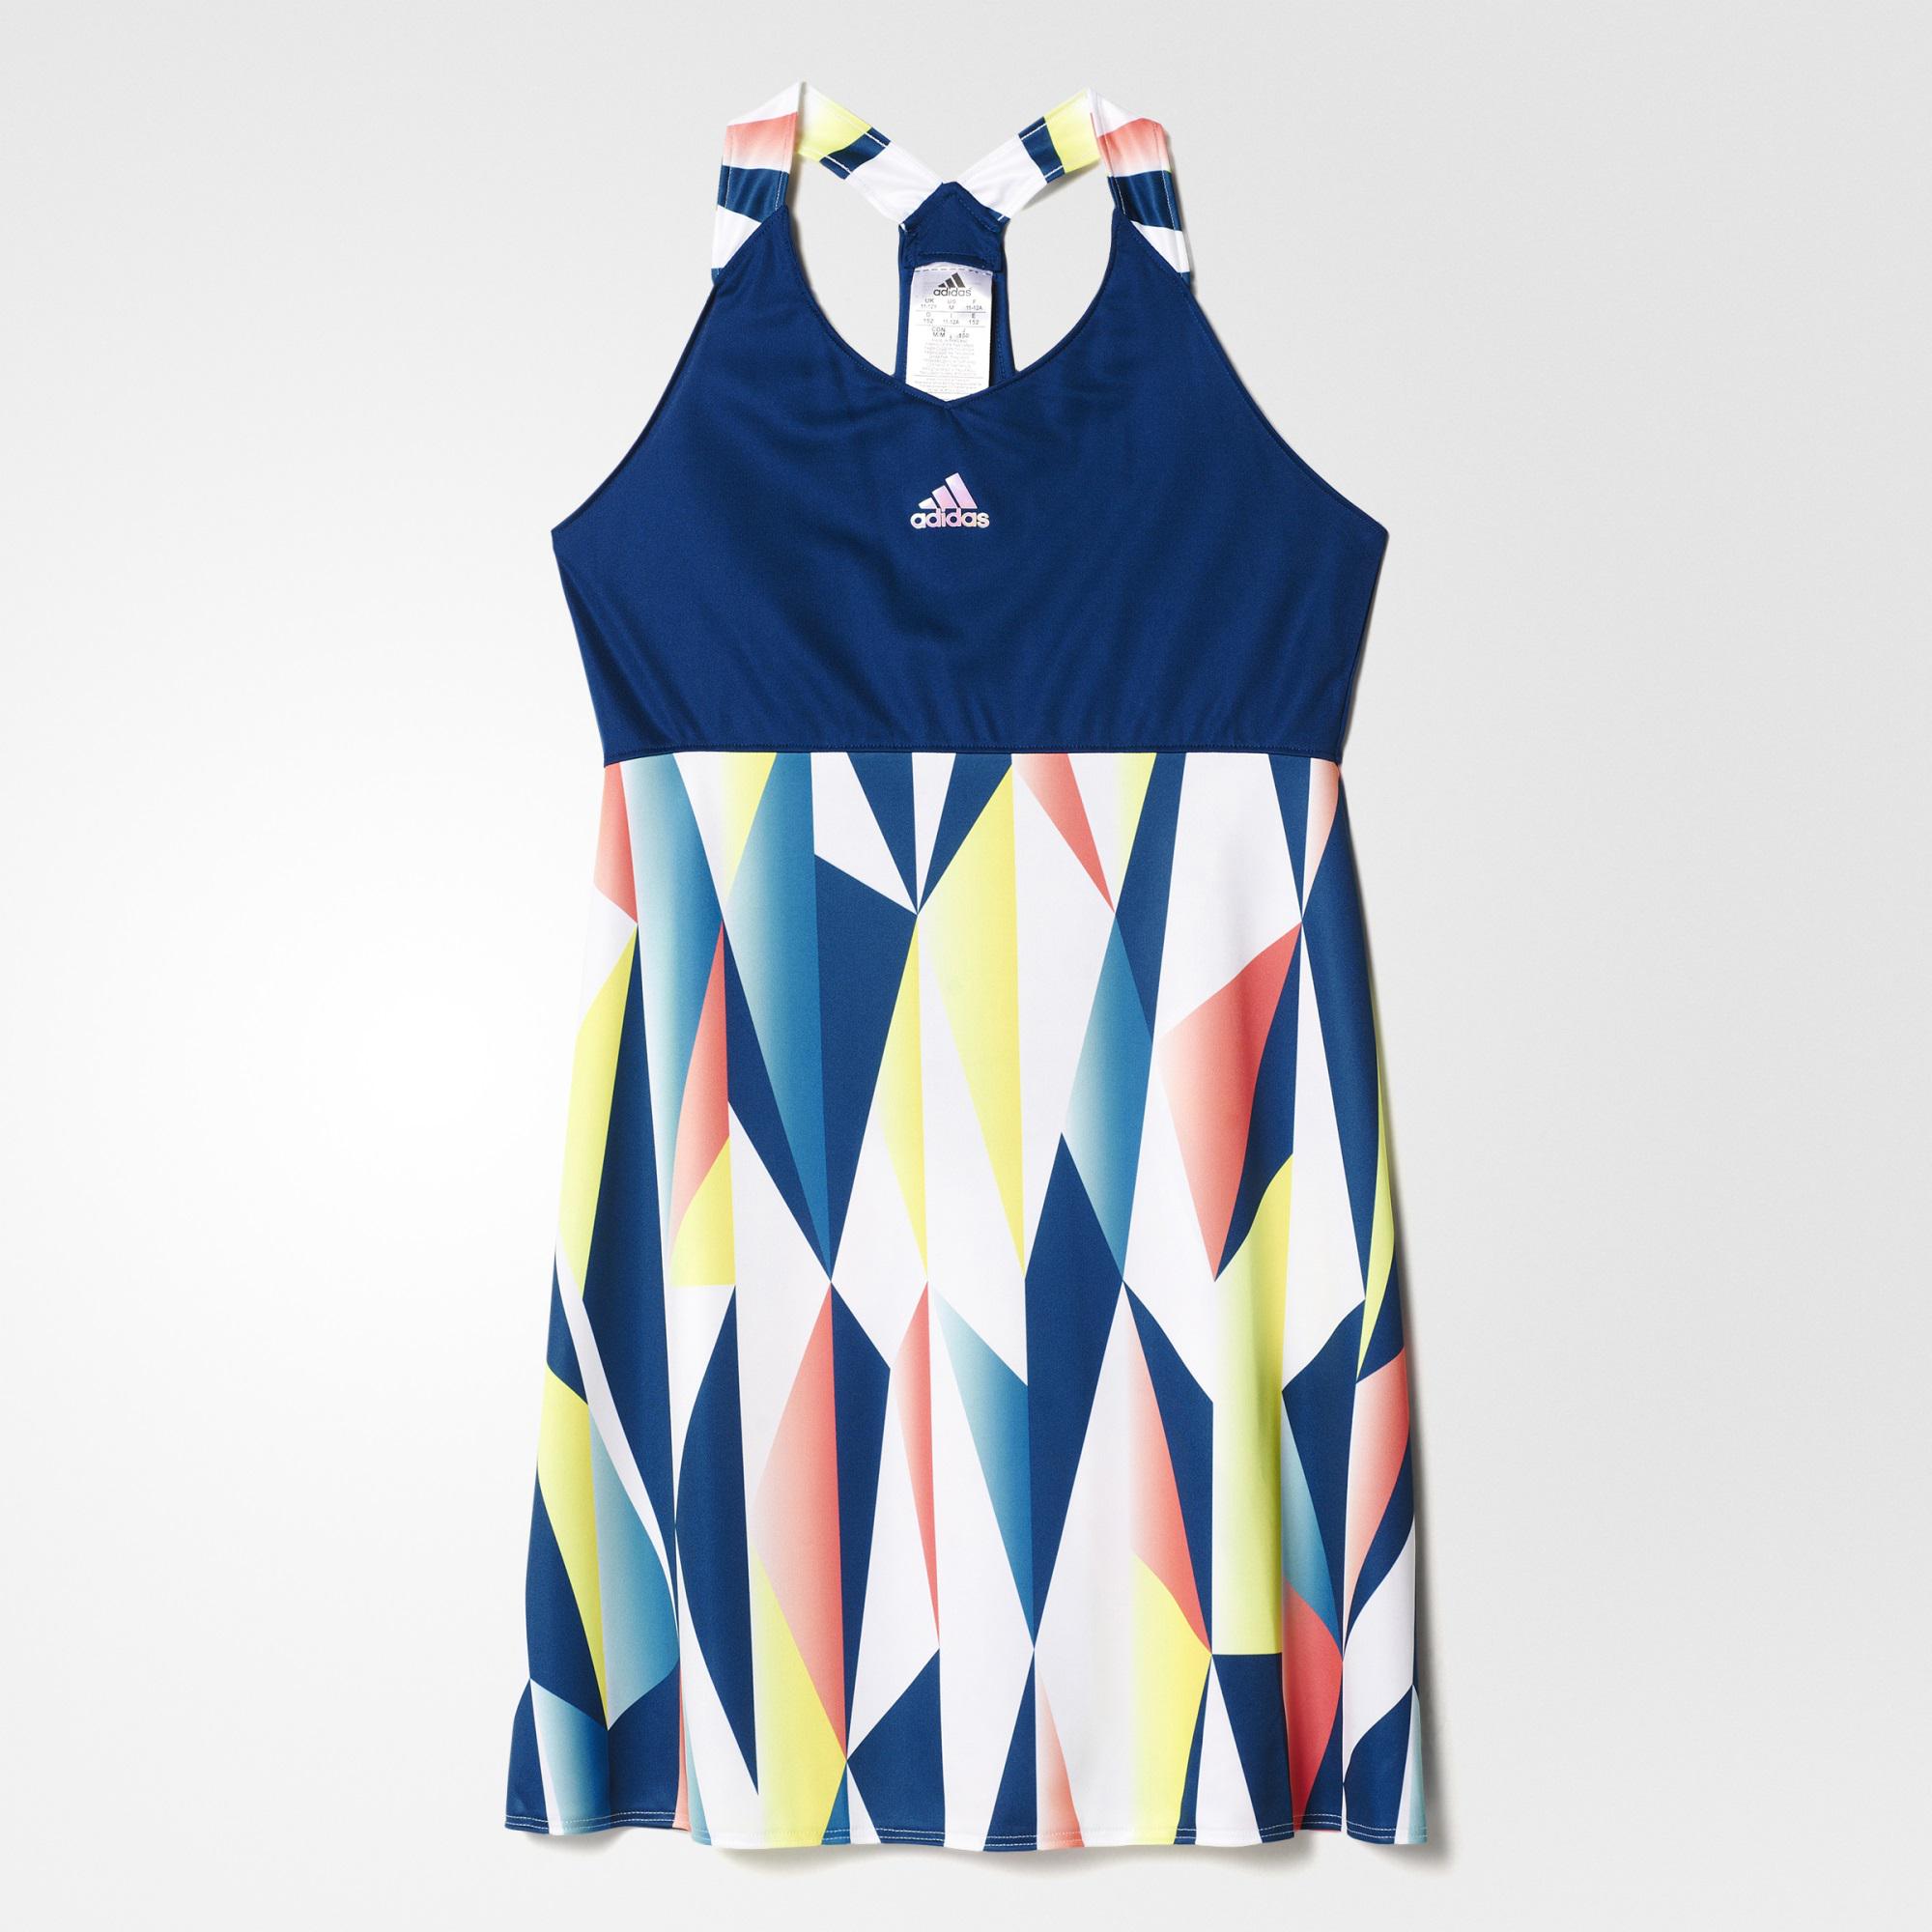 adidas tennis dress girl